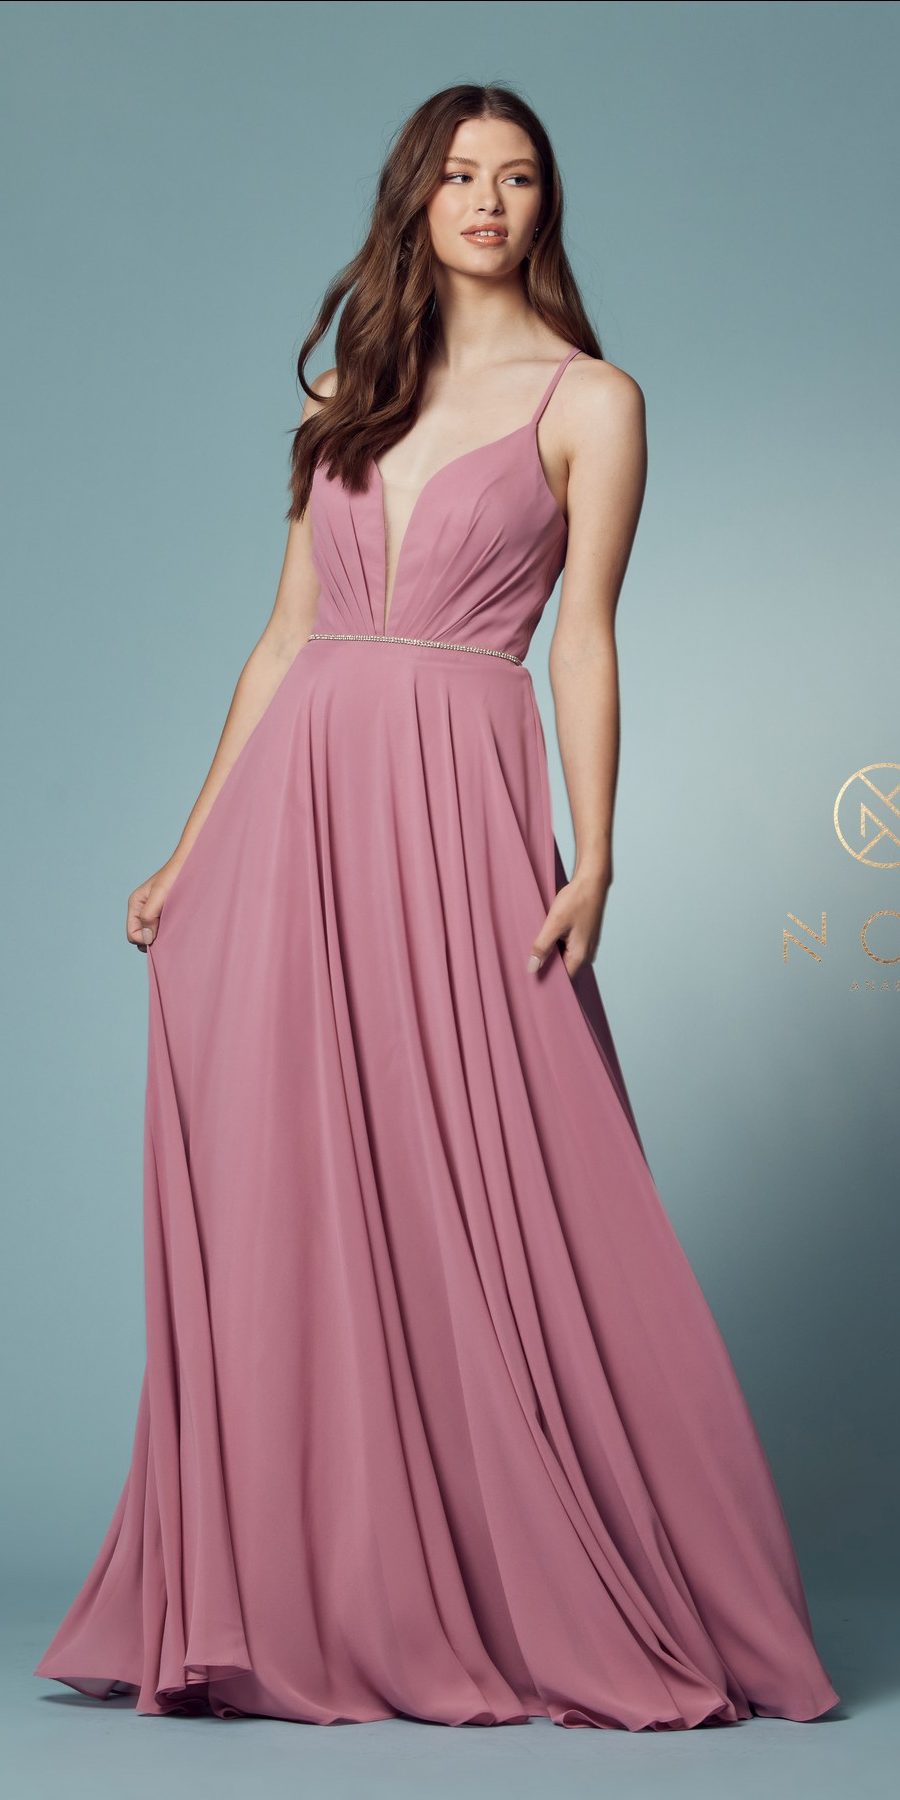 Nox Anabel R416 Dress